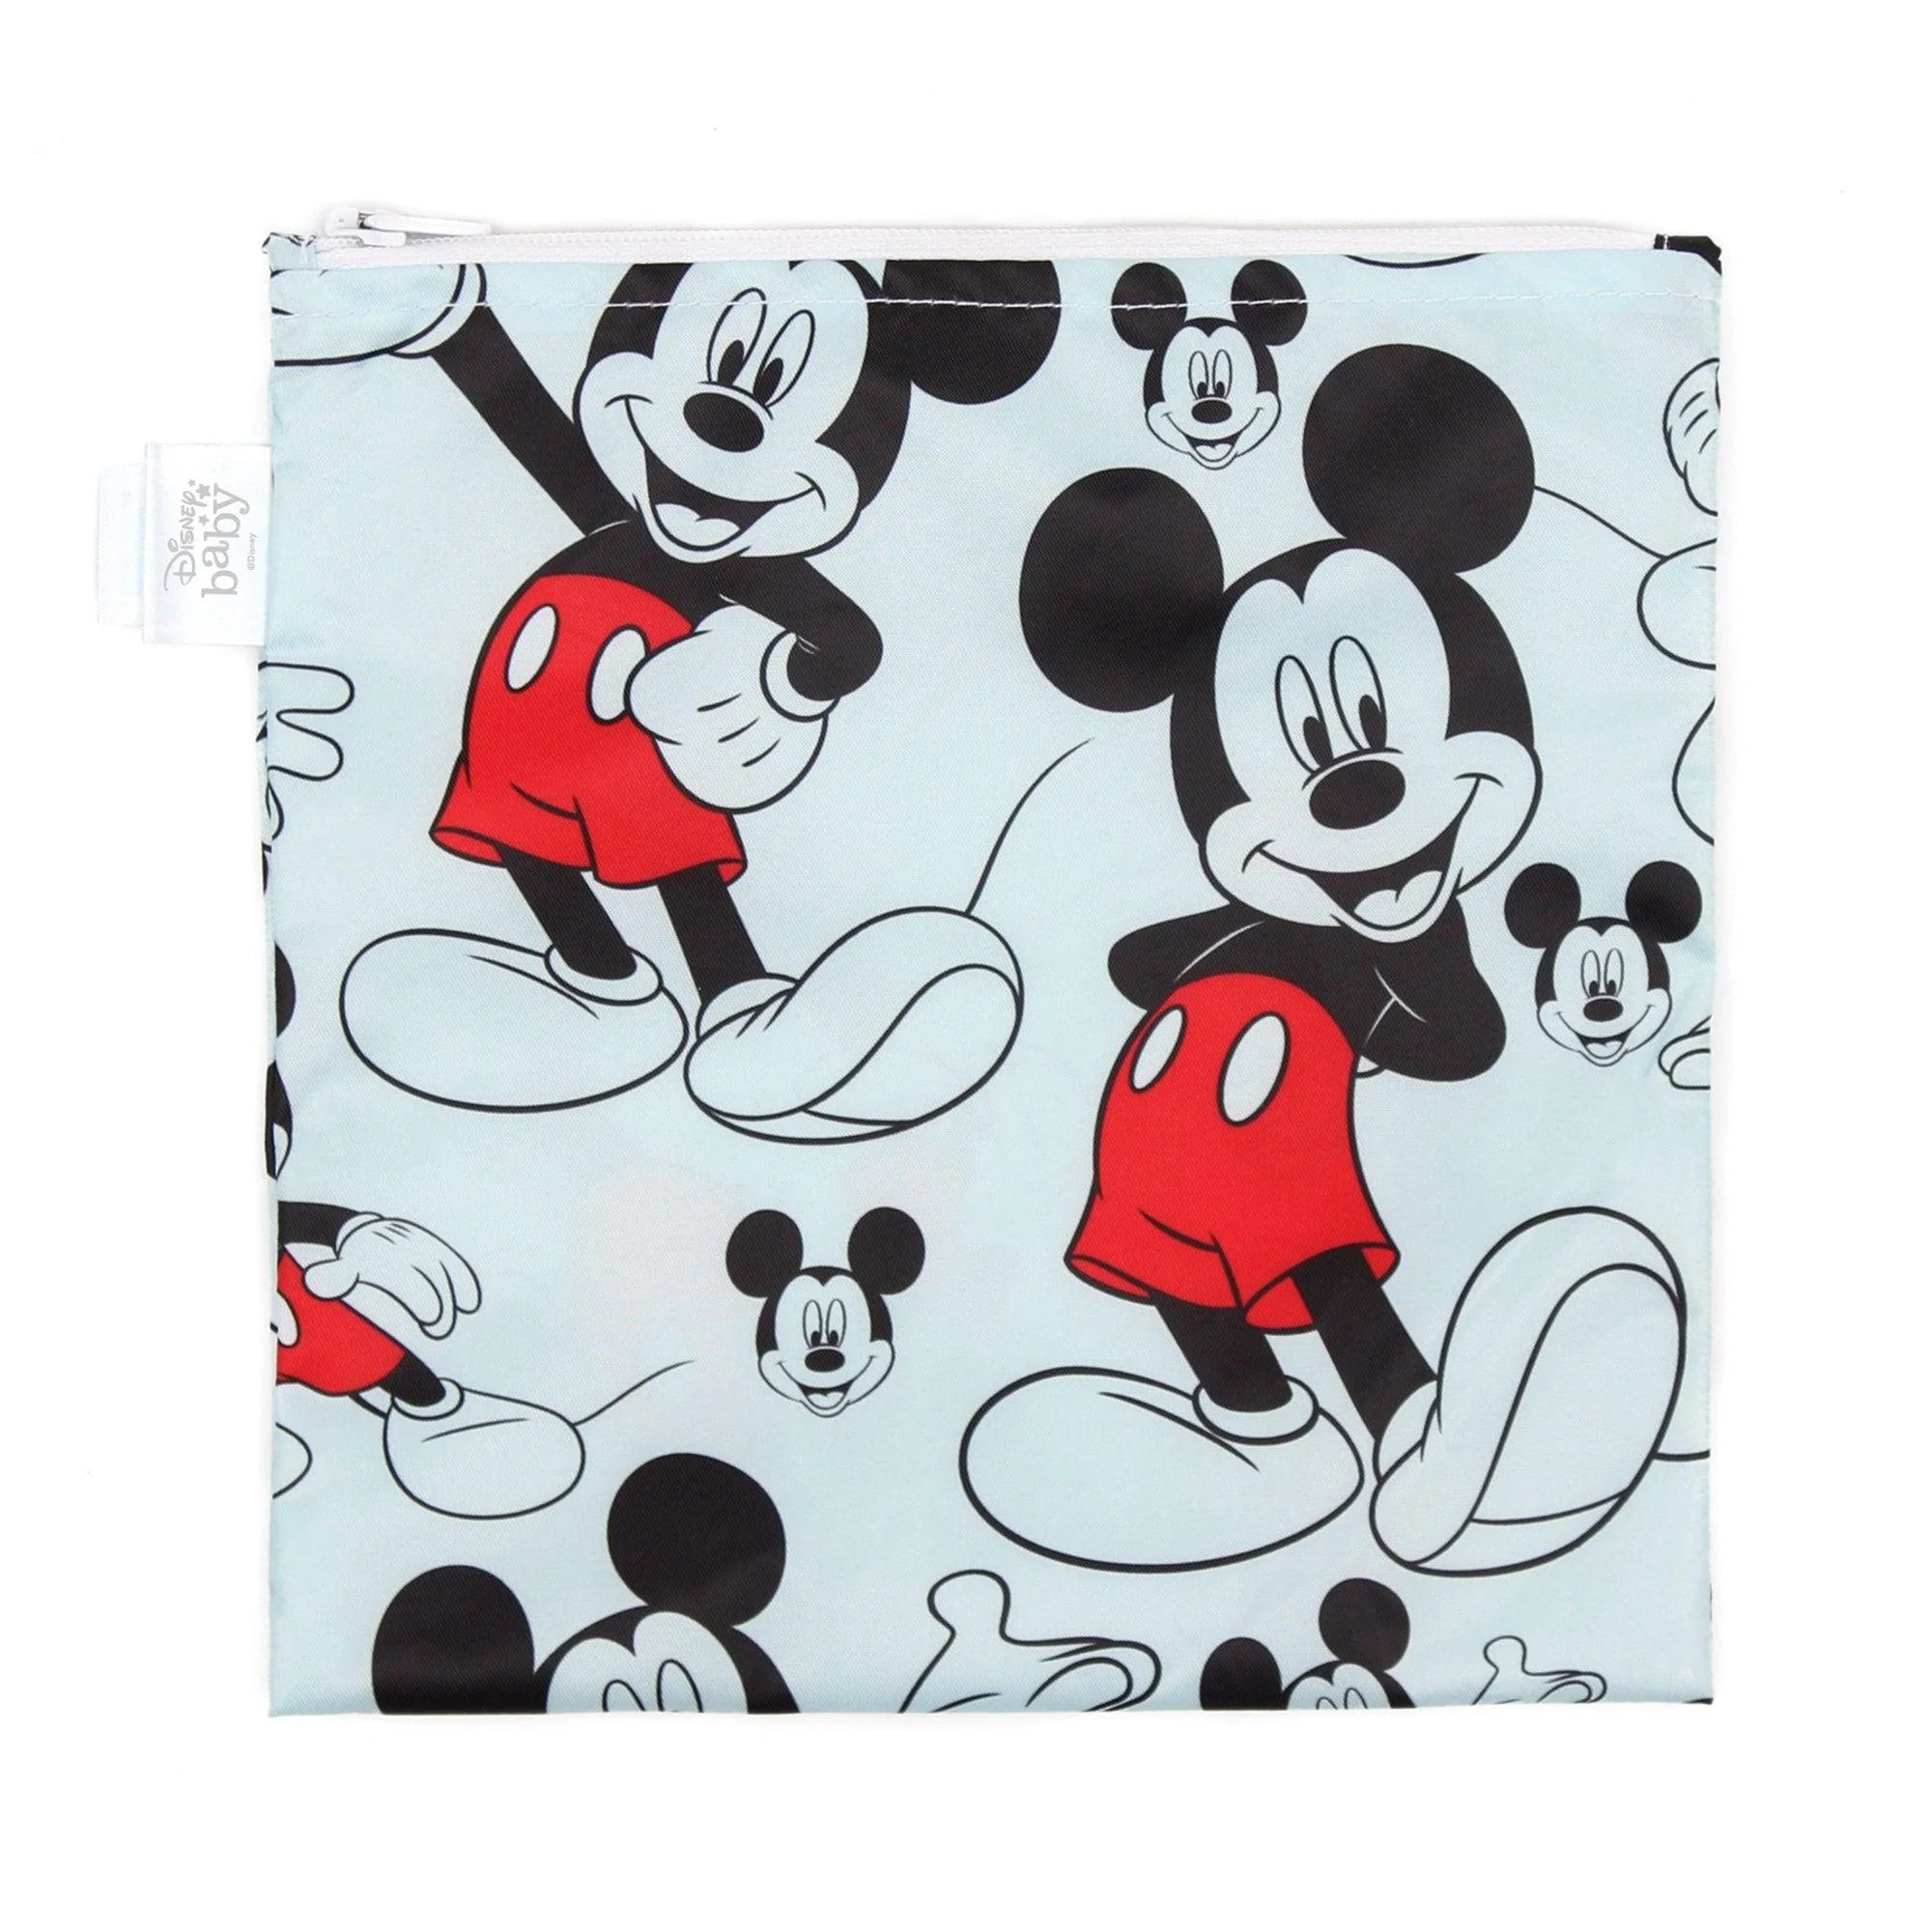 Disney Minnie Mouse Girl Pink 3pk Snack Bags (Ellie Snack bag 3pk)